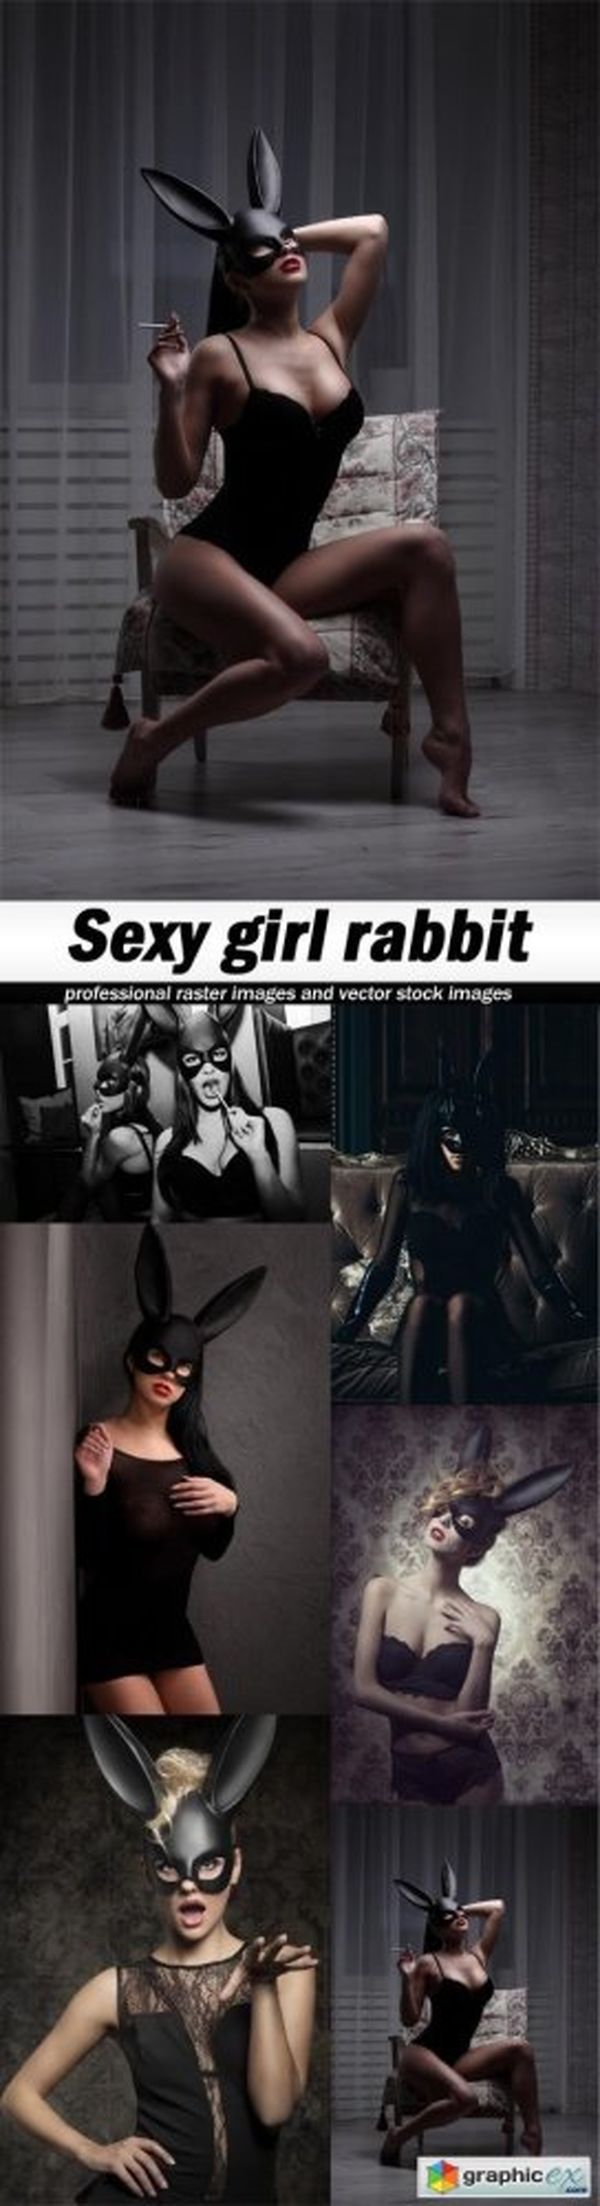 Sexy girl rabbit-6xJPEGs 